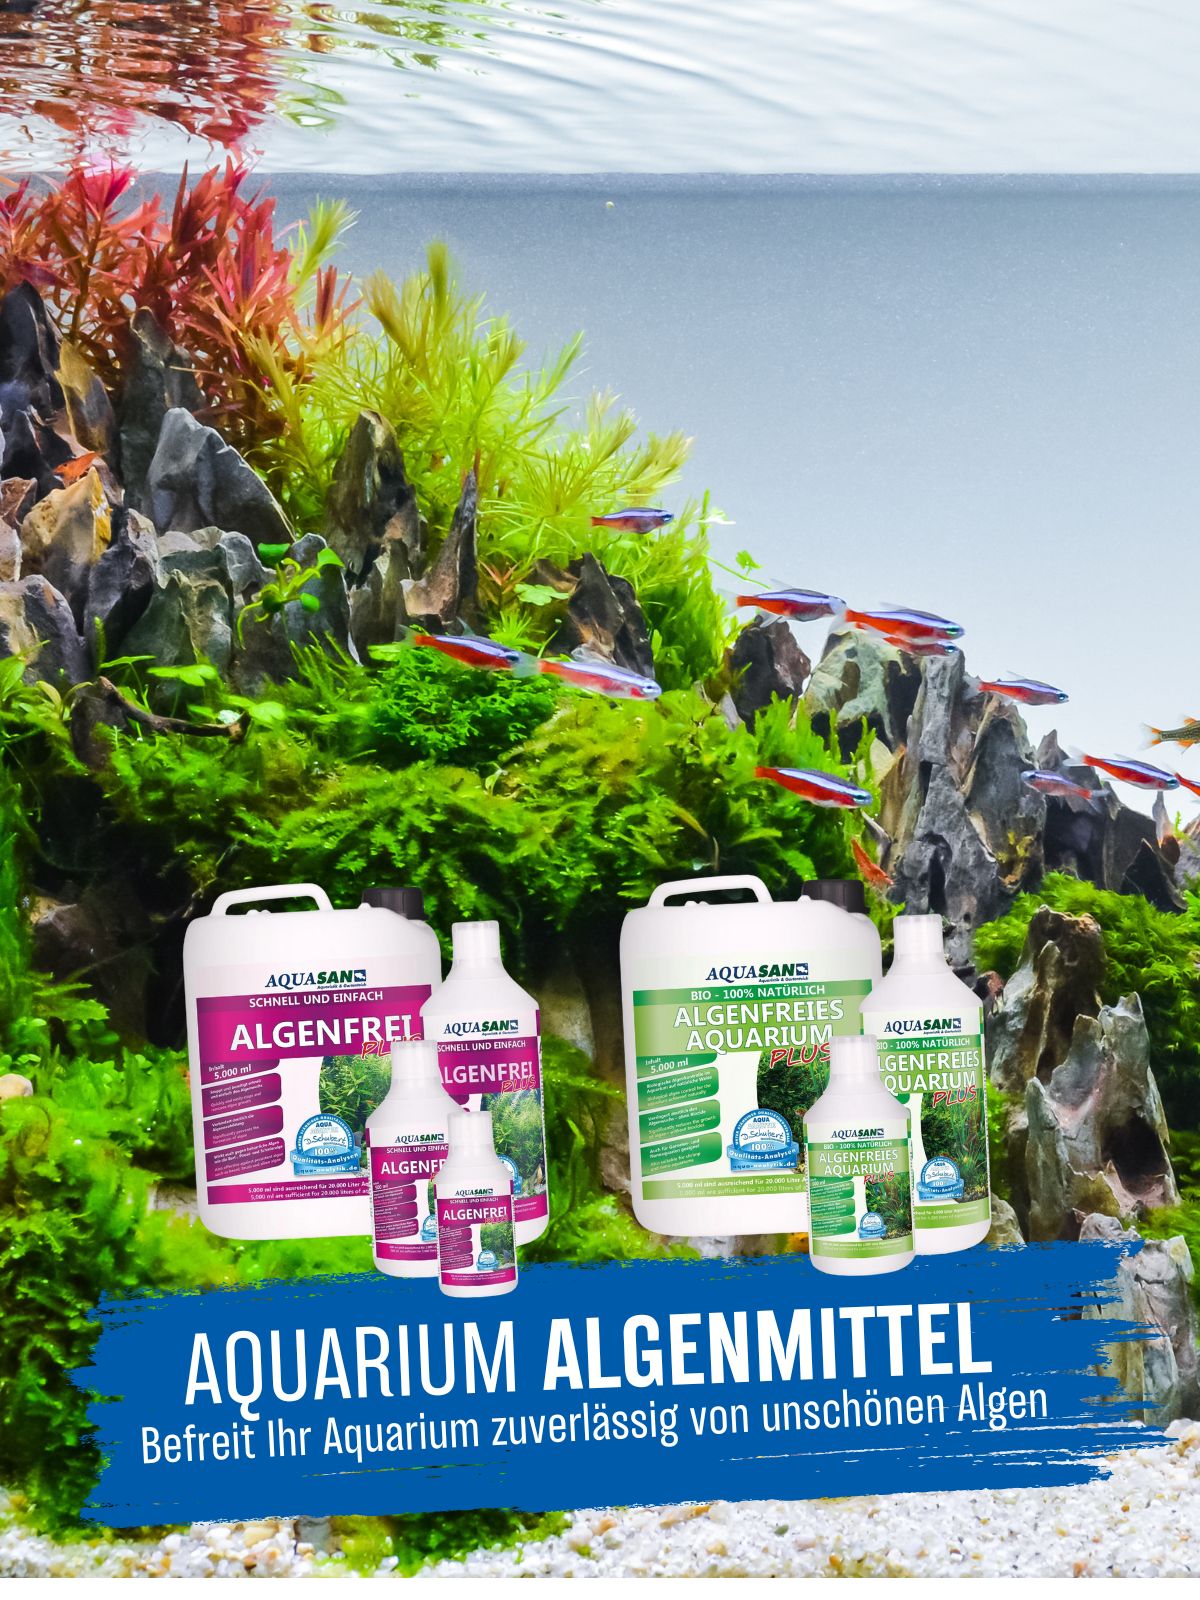 Aquarium Algenmittel Kategoriebild Mobil